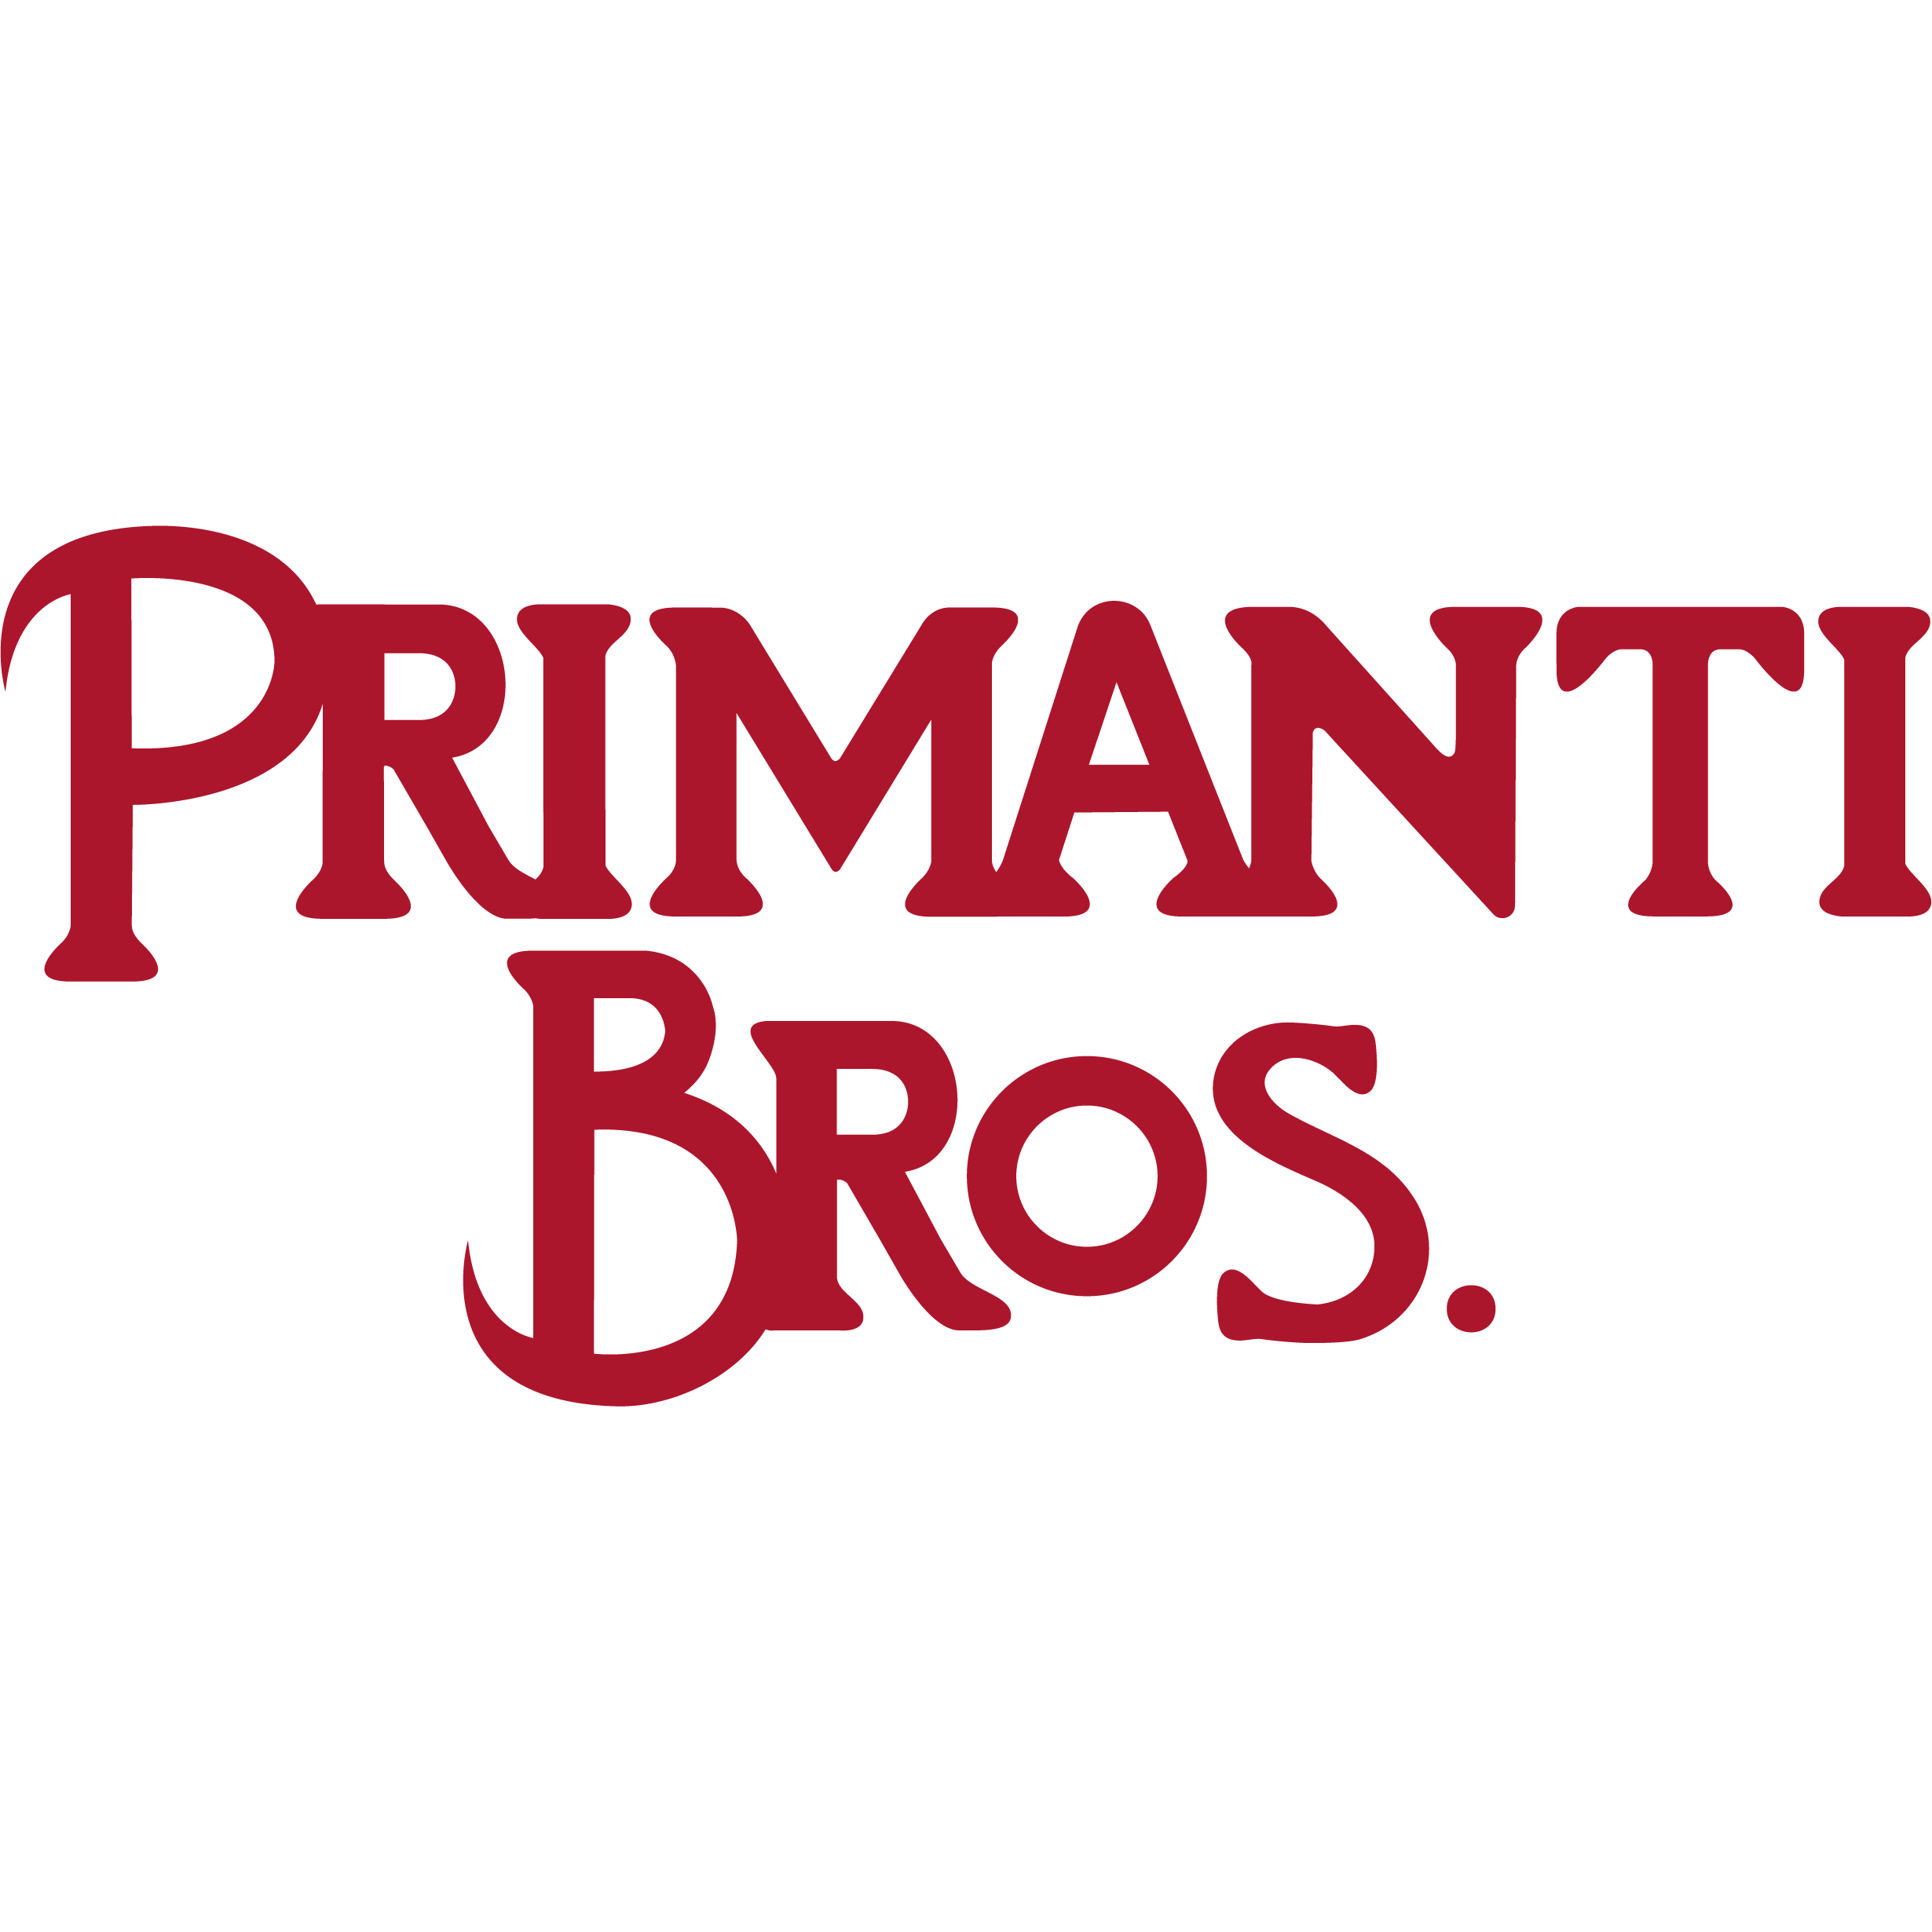 Primanti Bros. Restaurant and Bar Allison Park (412)213-7350